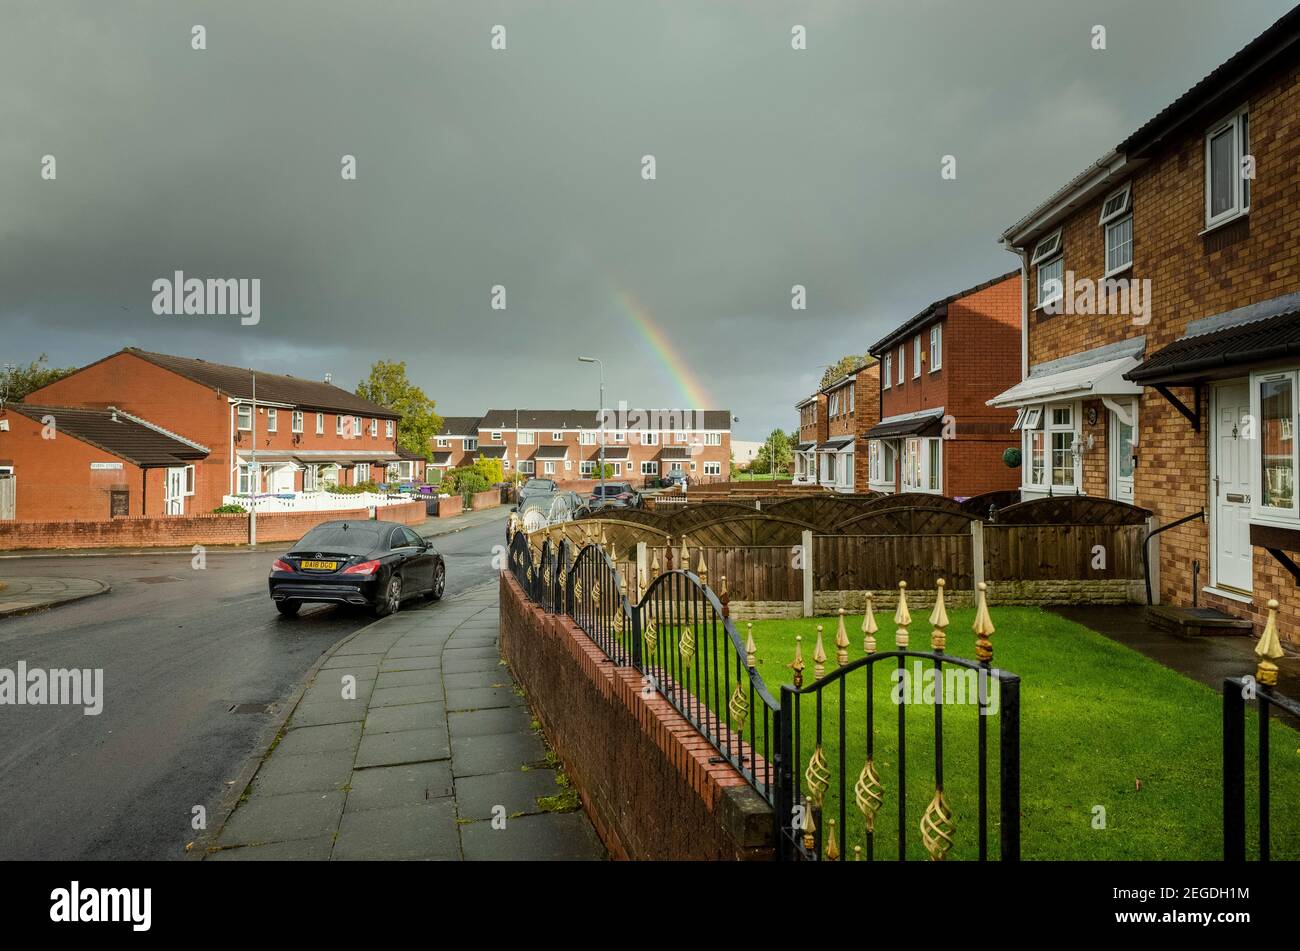 Rainbow in the skies over Beacon Lane in Everton, Liverpool, Merseyside England UK Stock Photo